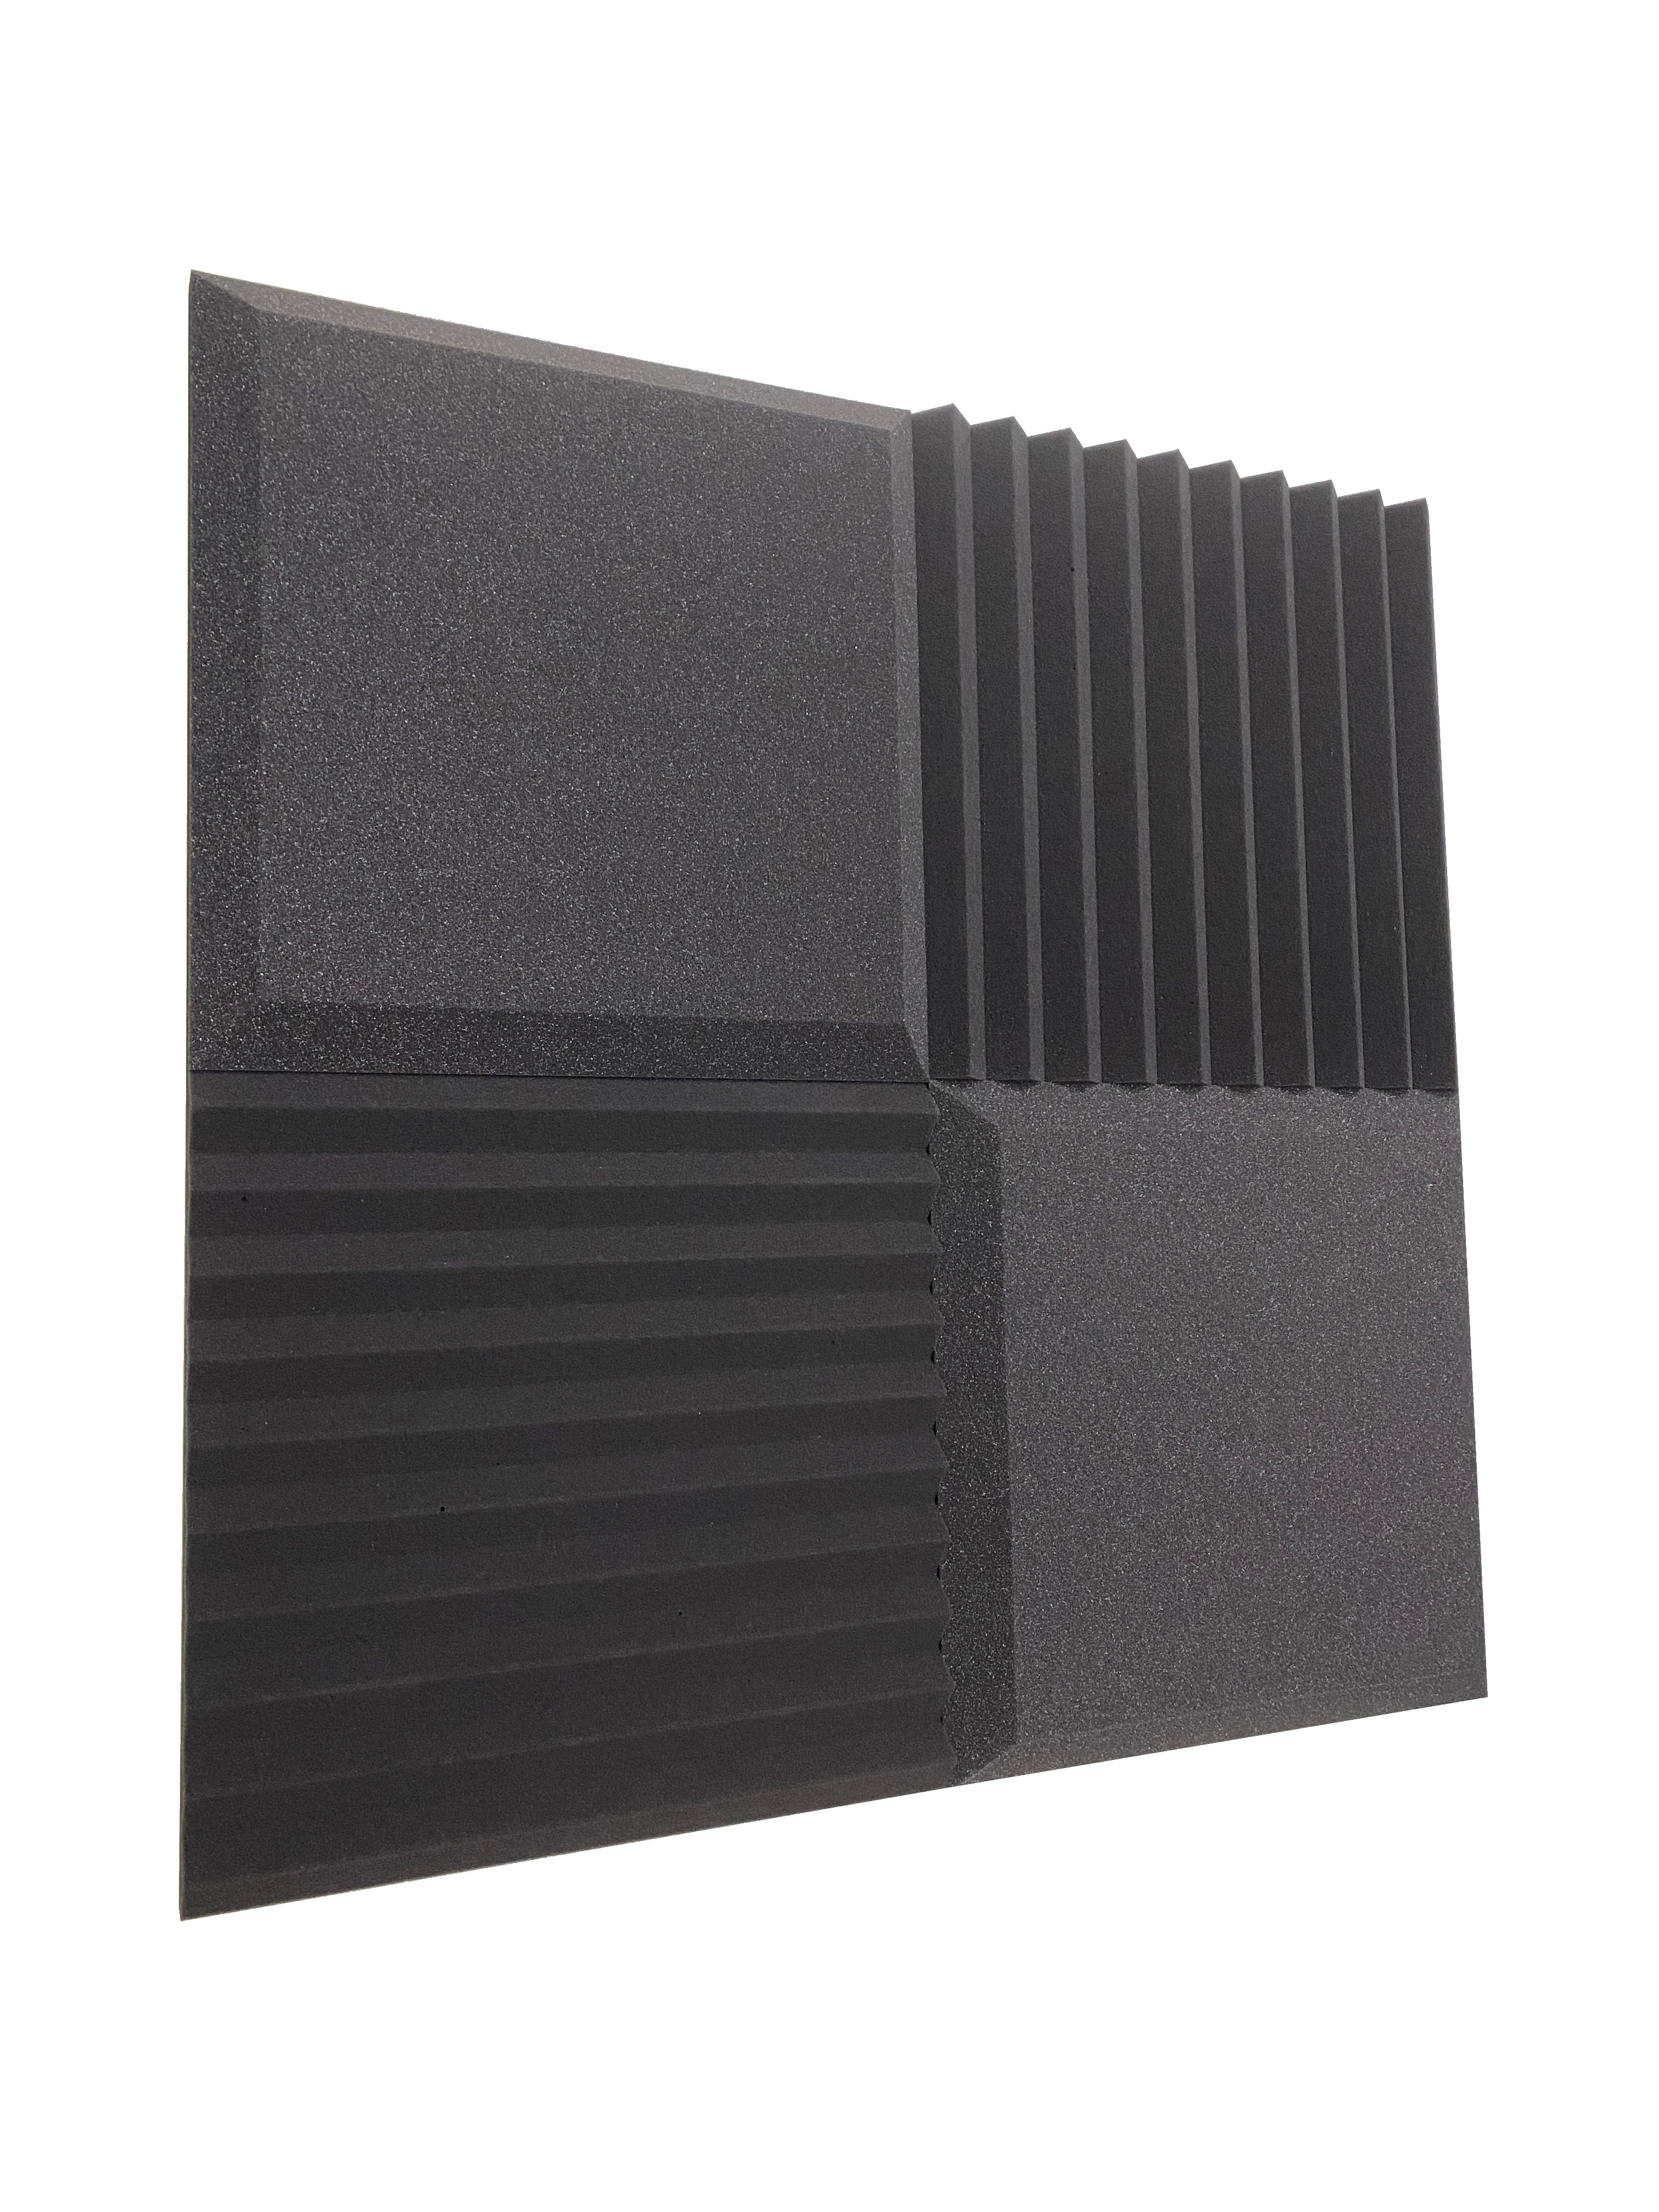 Buy dark-grey Euphonic Wedge Standard Acoustic Studio Foam Tile Pack